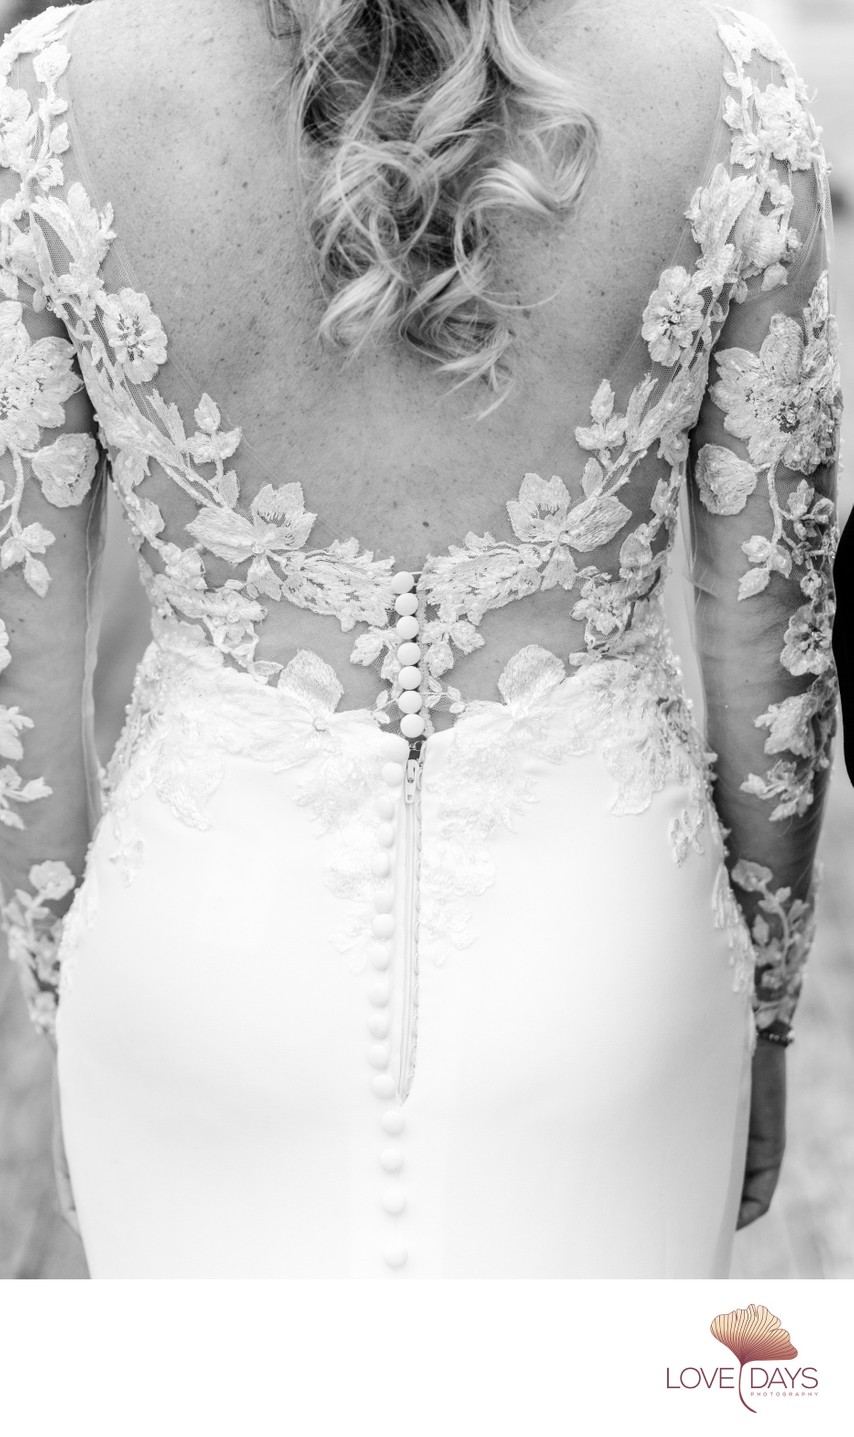 Stunning Bride detail at Wychmere